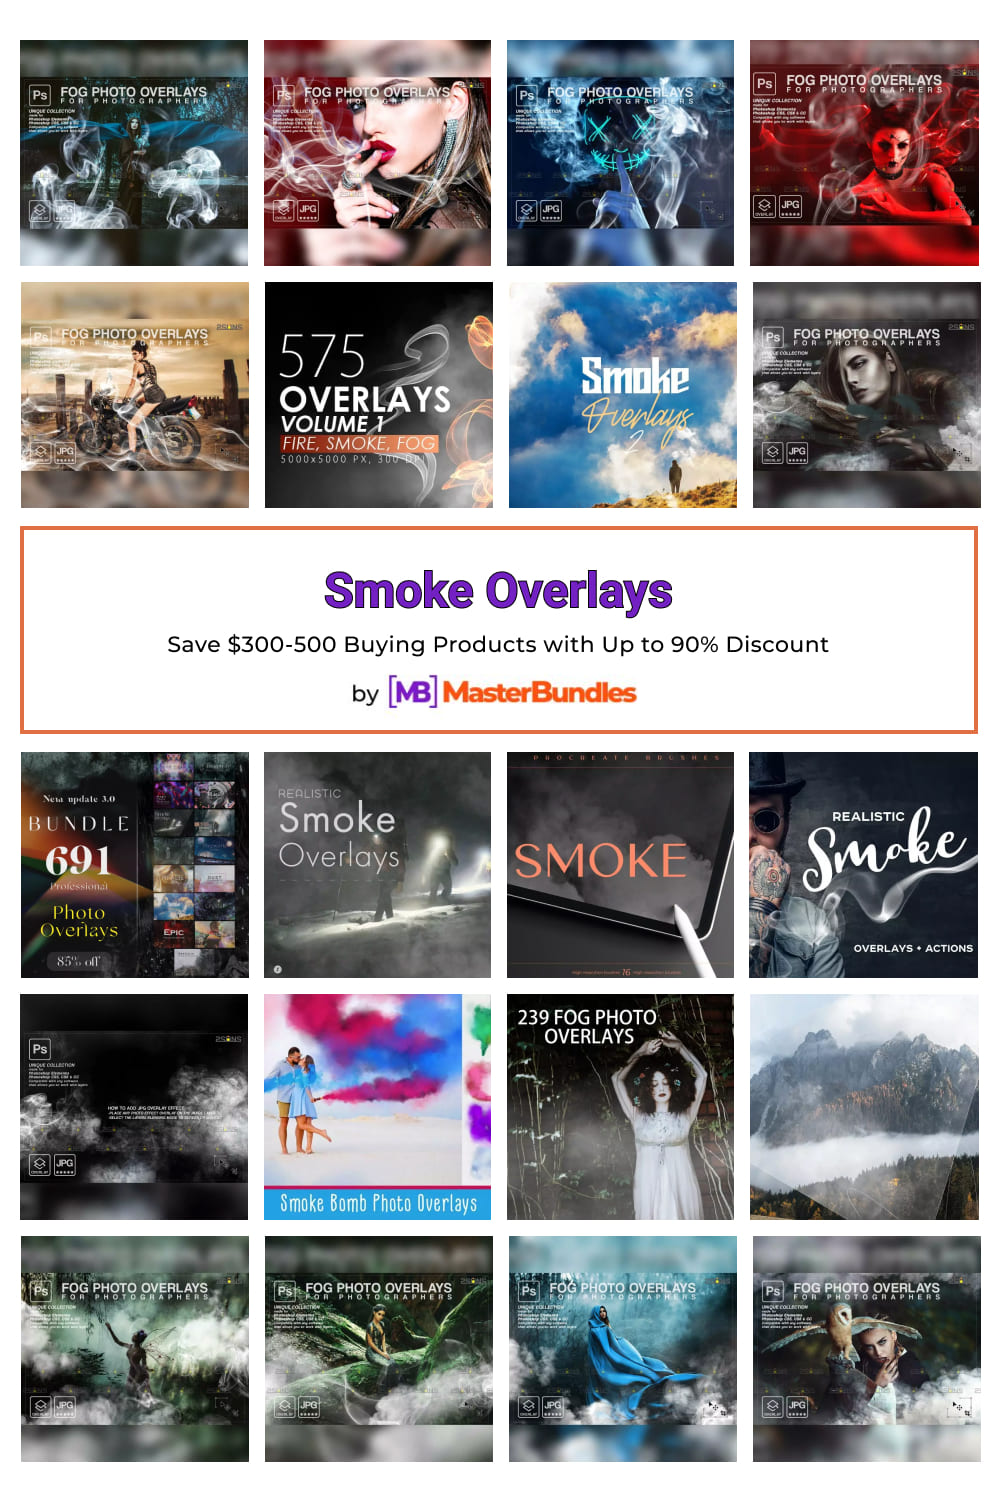 Smoke Overlays Pinterest.